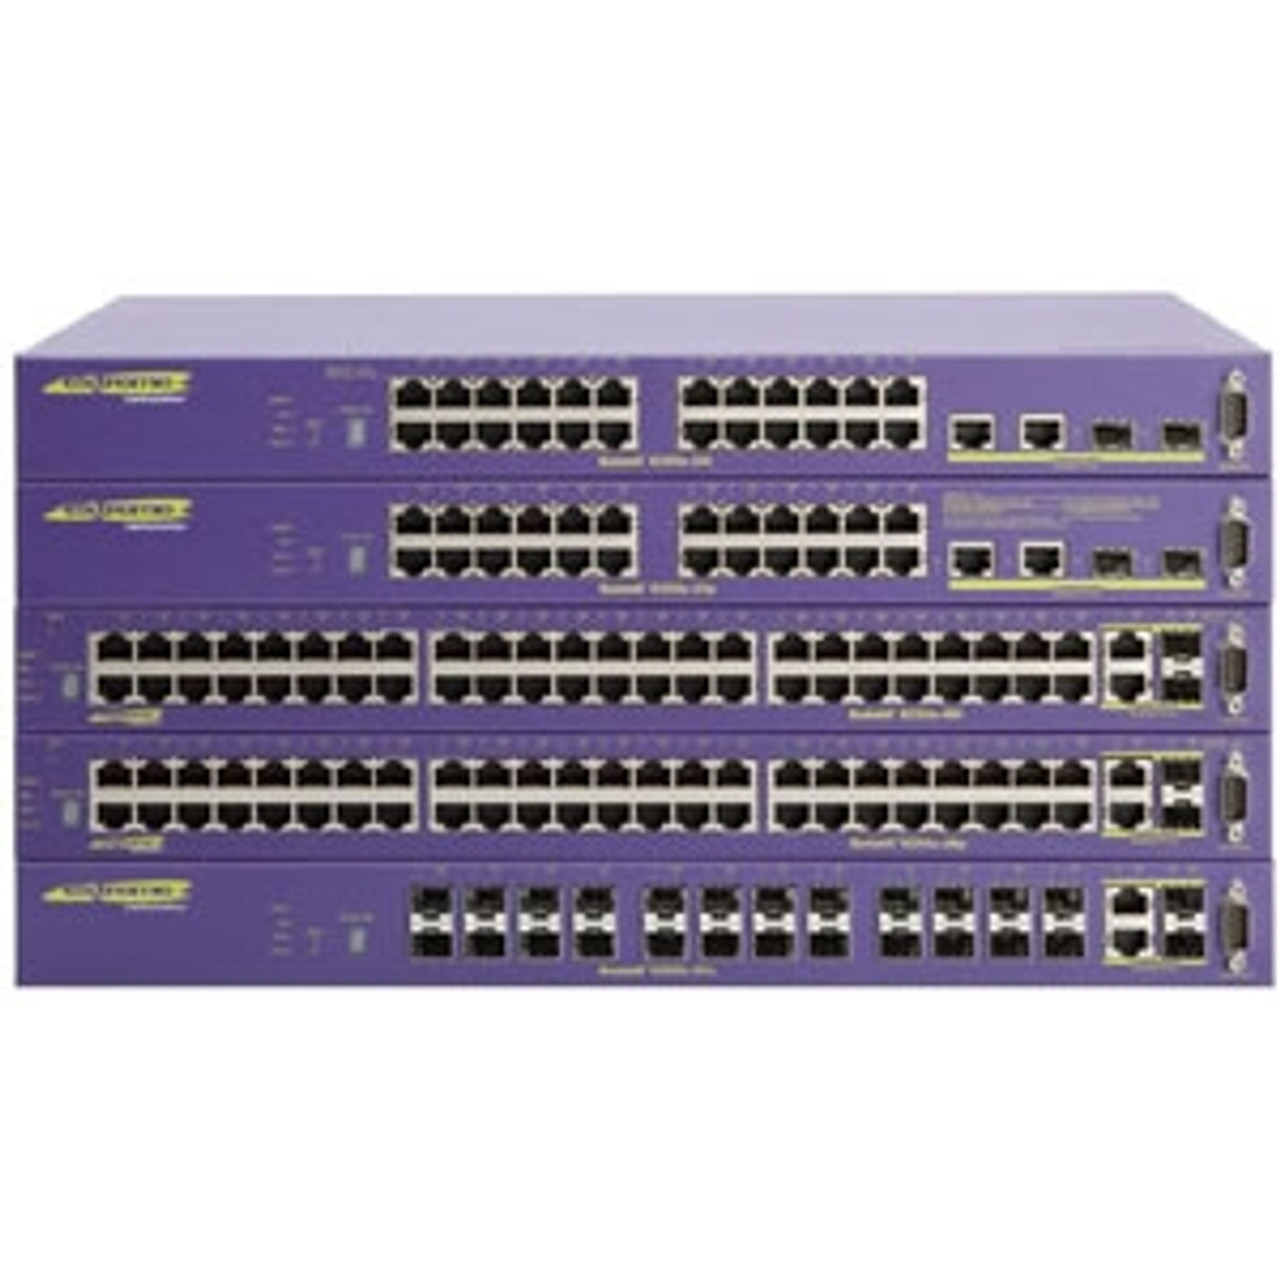 15121 Extreme Networks Summit X250e-24t Layer 3 Switch 2 x SFP (mini-GBIC) Shared 24 x 10/100Base-TX LAN, 2 x 10/100/1000Base-T LAN (Refurbished)